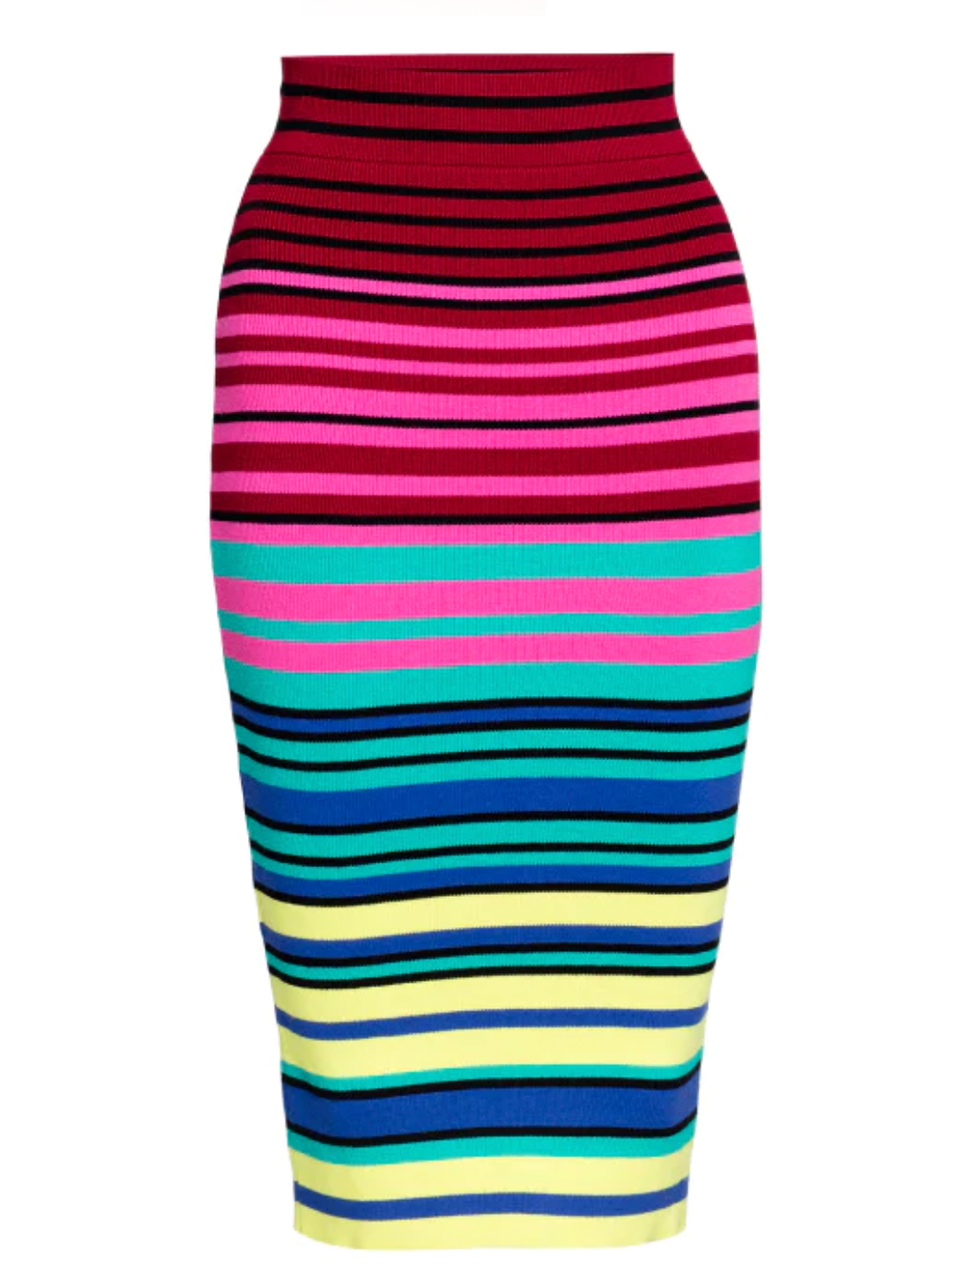 LE SUPERBE Oaxaca Knit Skirt in Fuchsia Stripe Product Shot 